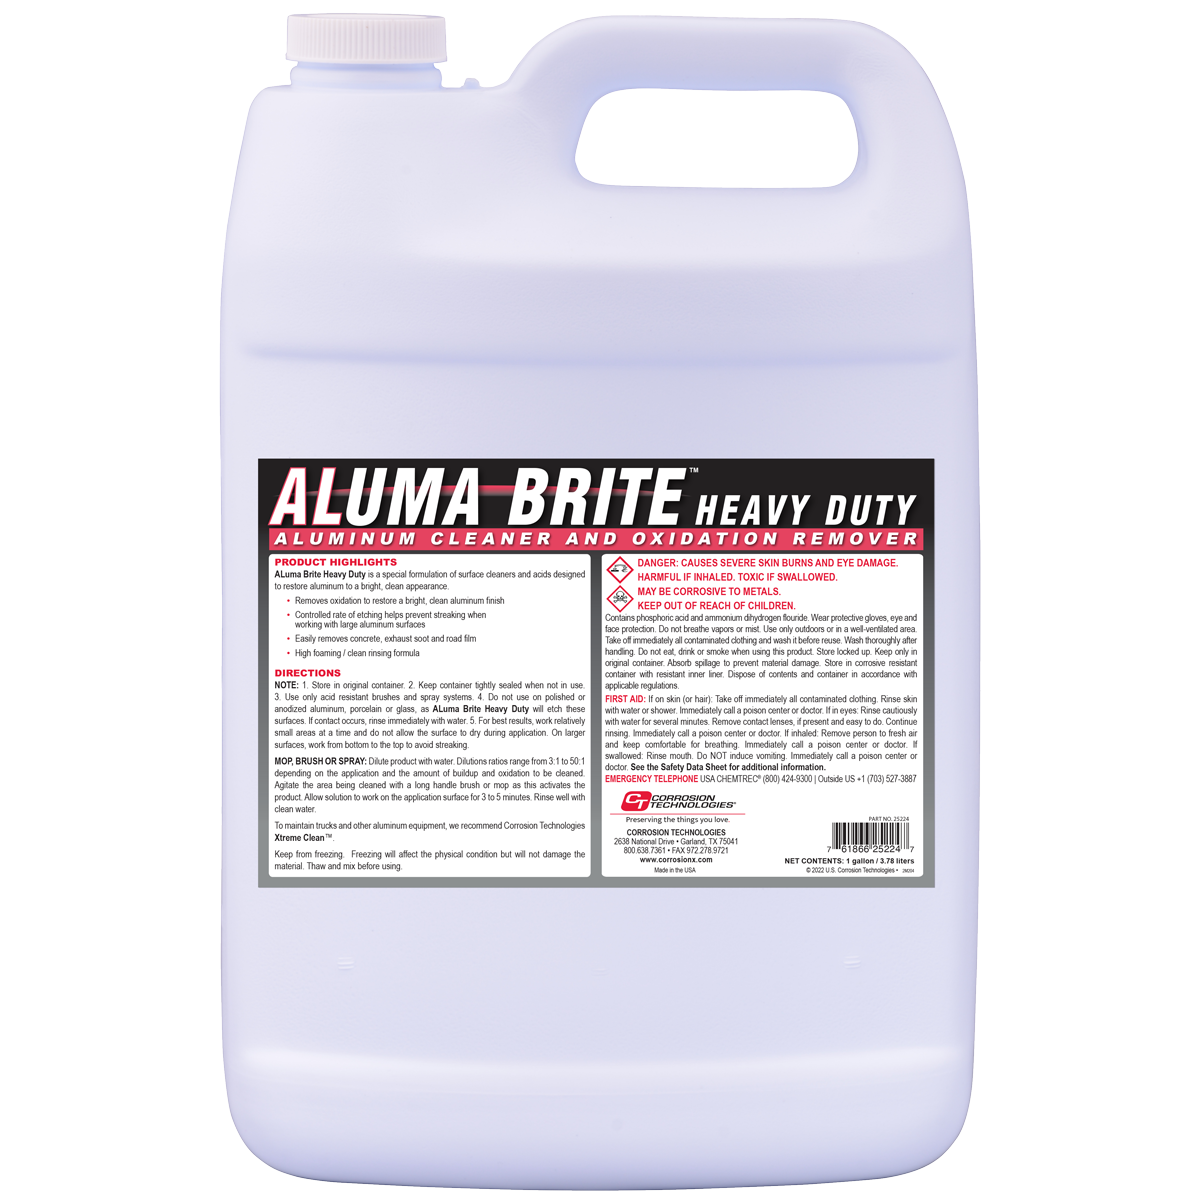 Aluma Brite Heavy Duty Aluminum Cleaner 30 Gallon